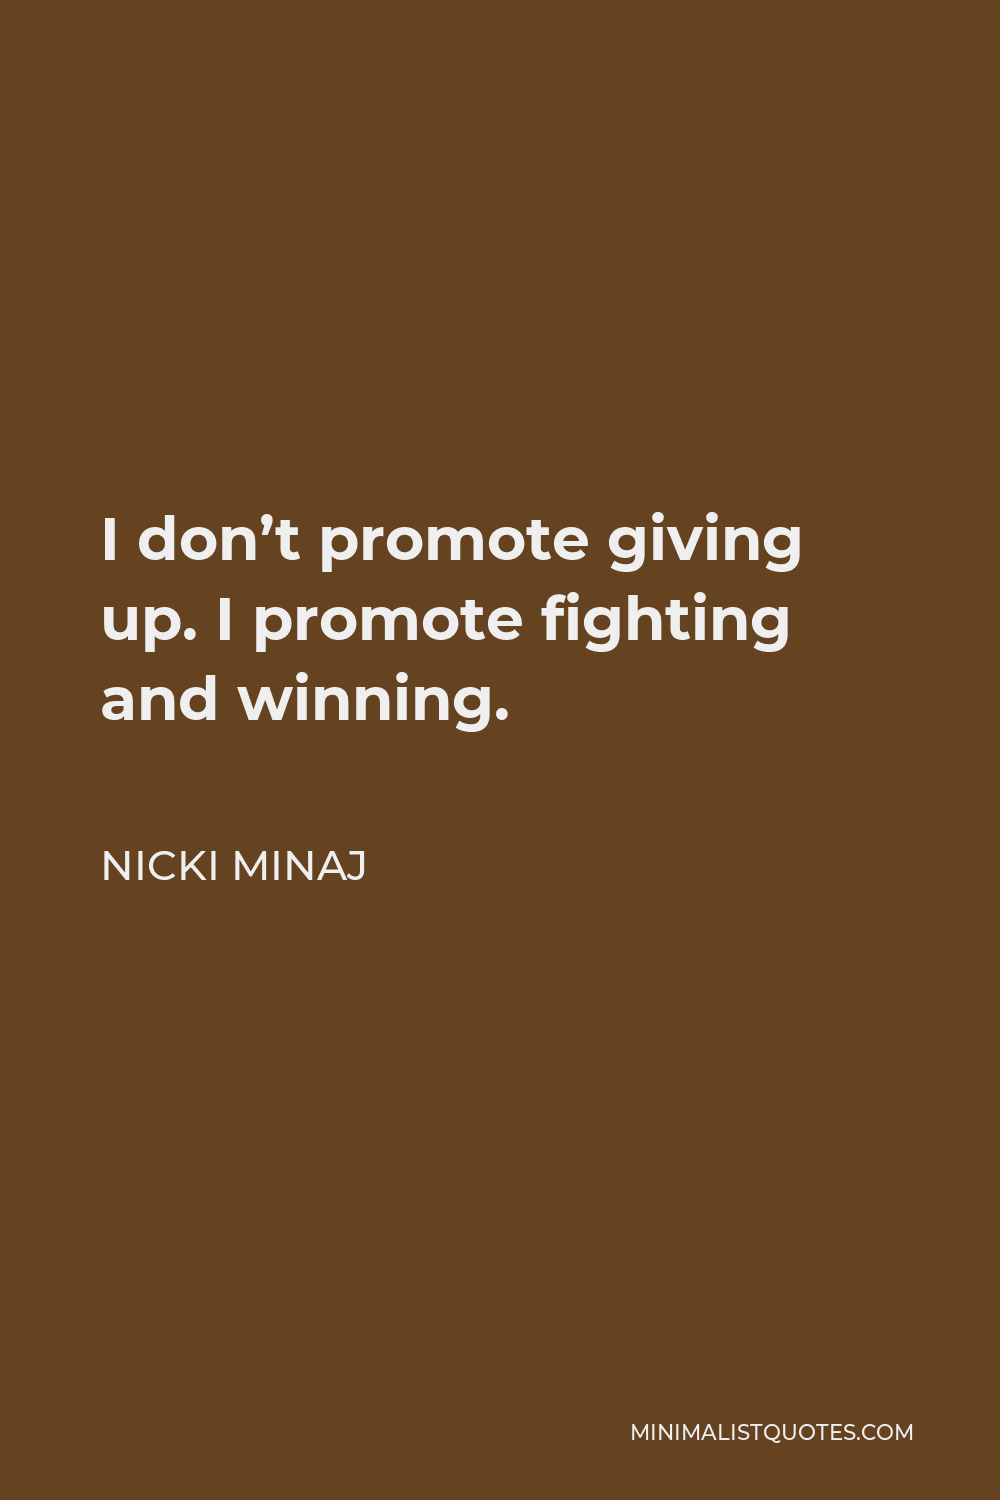 Nicki Minaj Quote: I don't promote giving up. I promote fighting